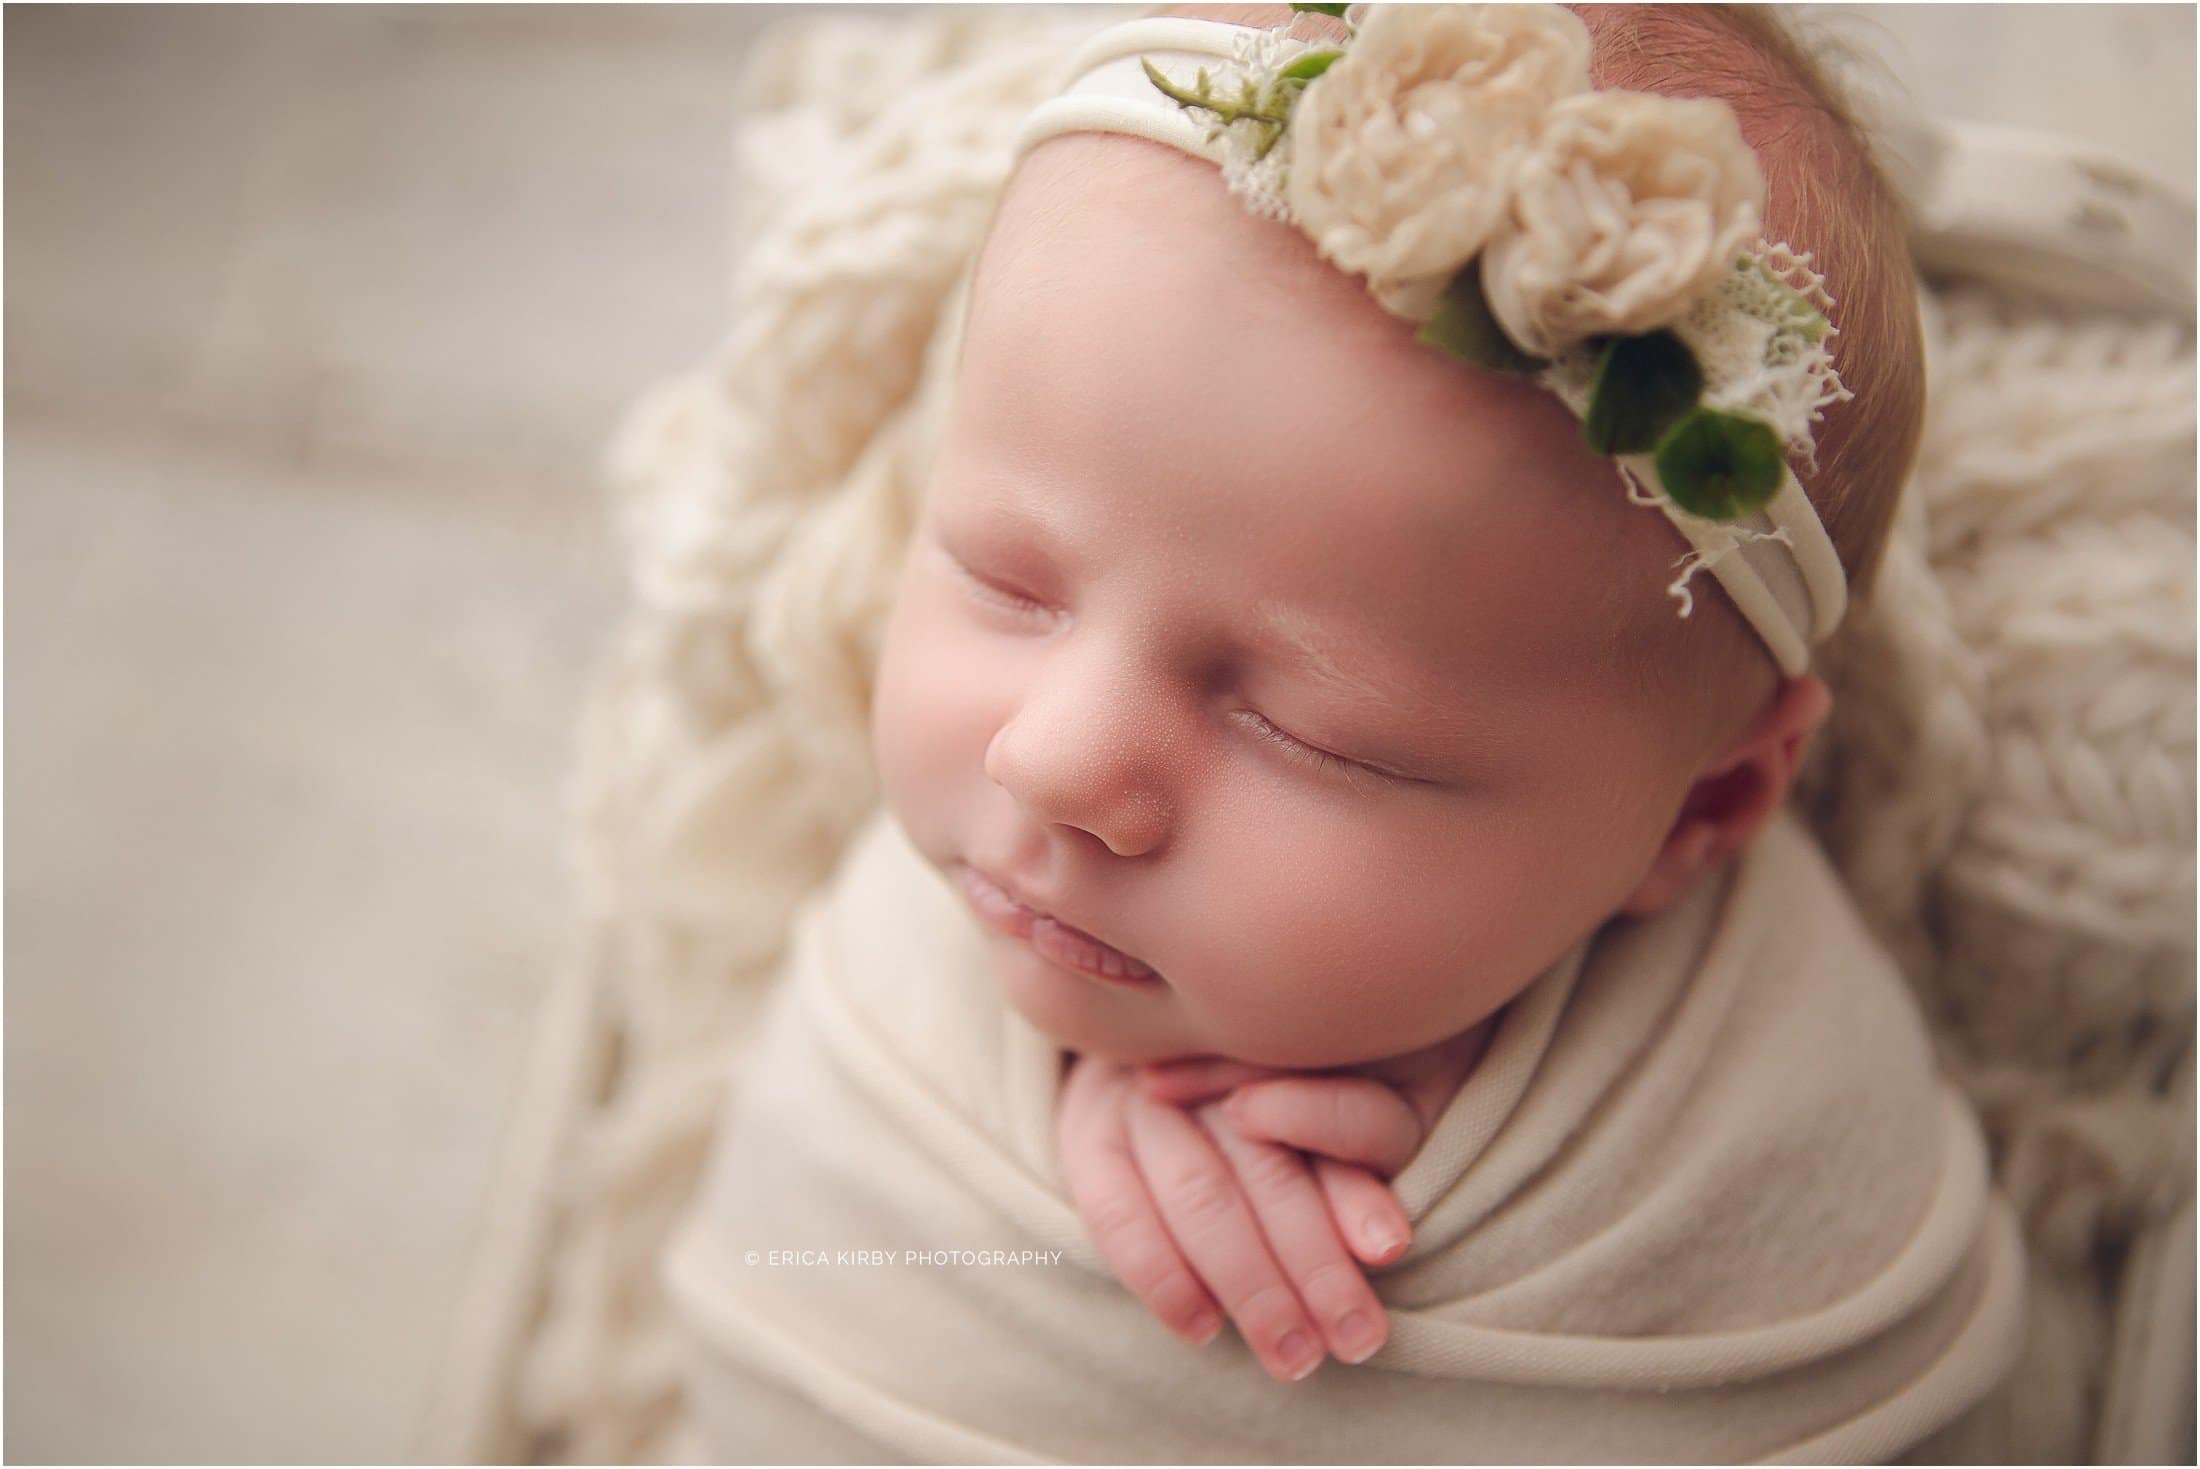 Baby girl newborn photo session in Bentonville Arkansas - Newborn Maternity Birth Photographer Northwest AR - Erica Kirby Photography NWA